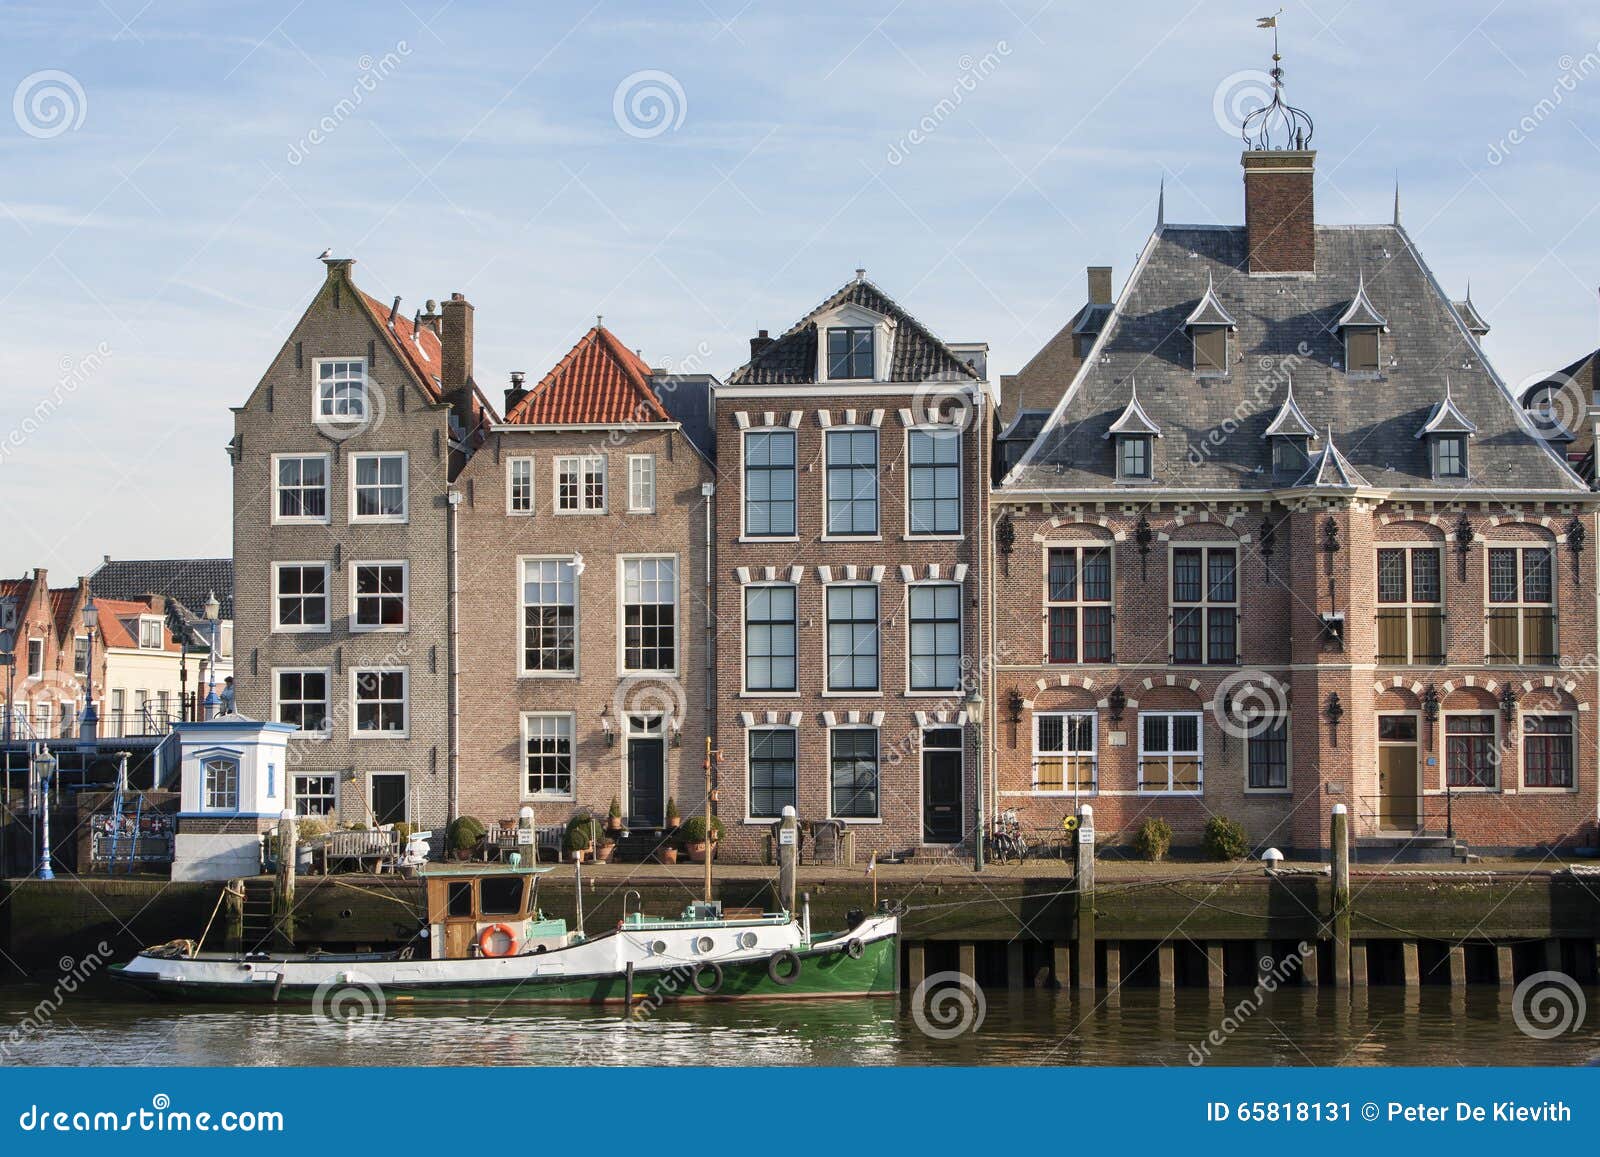 historical quayside of maassluis